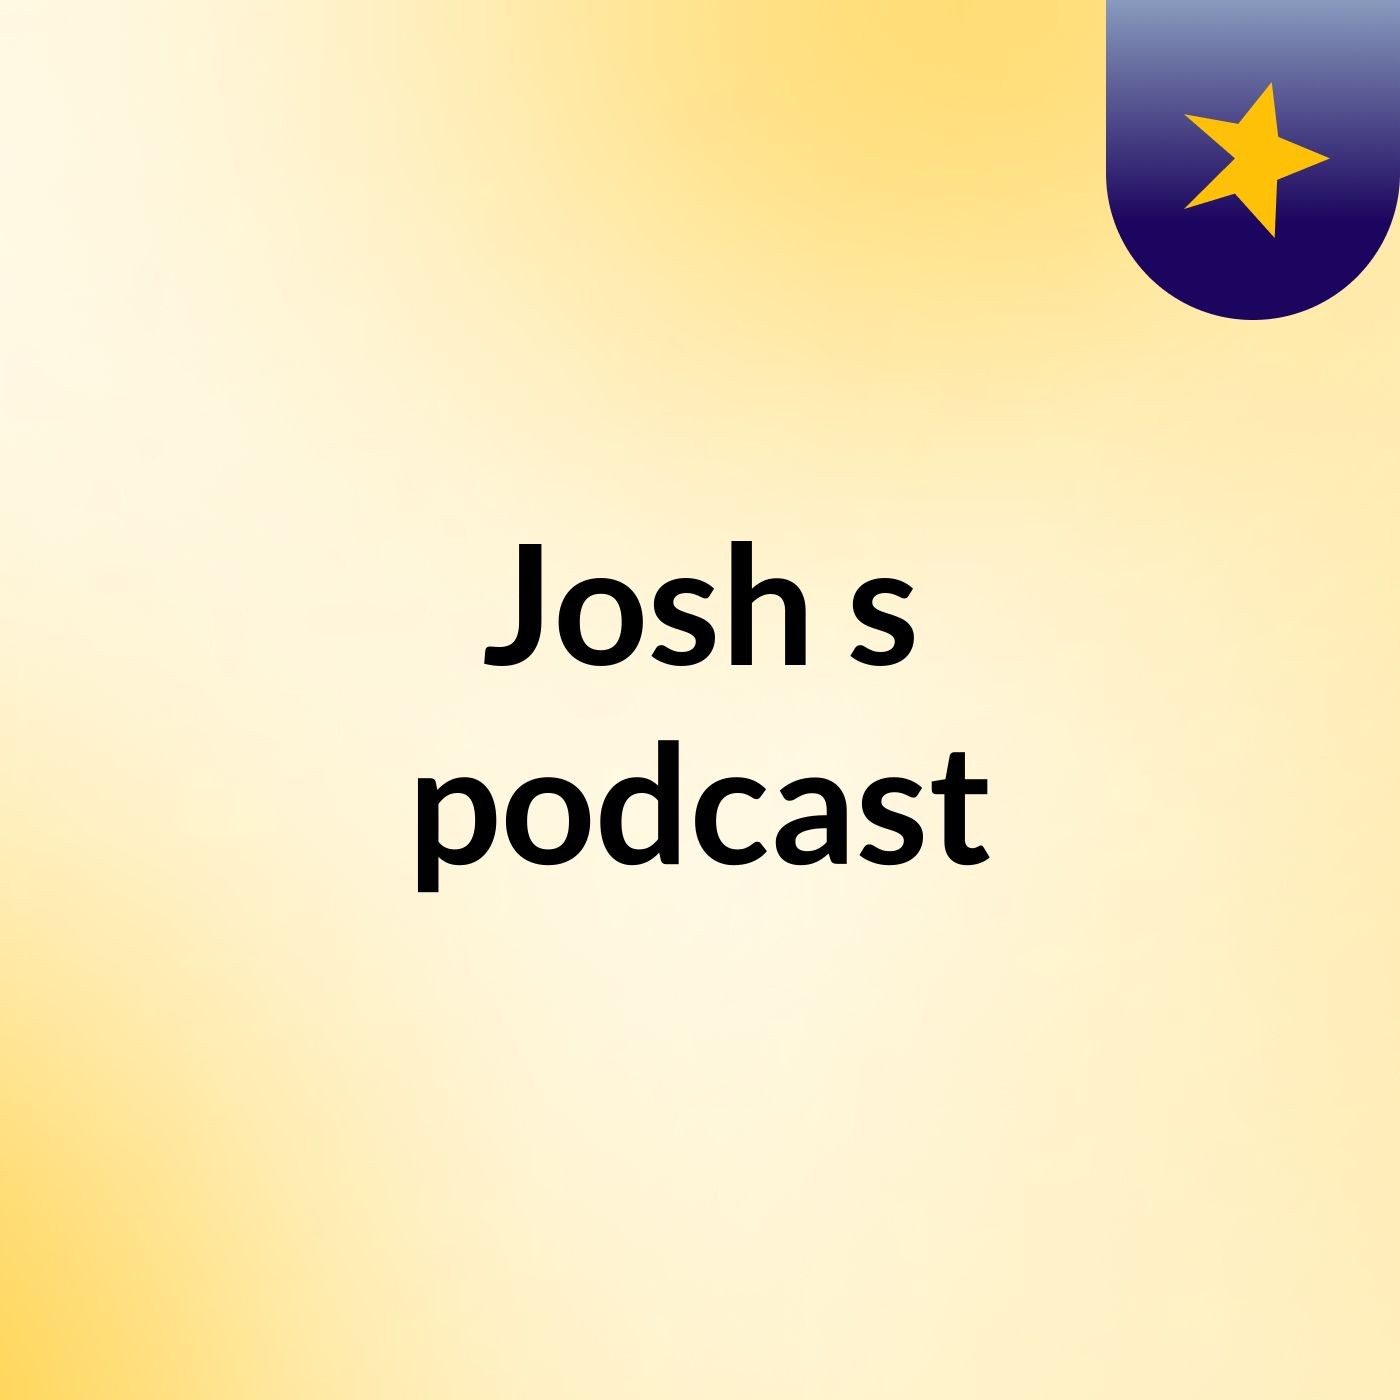 Episode 2 - Josh's podcast